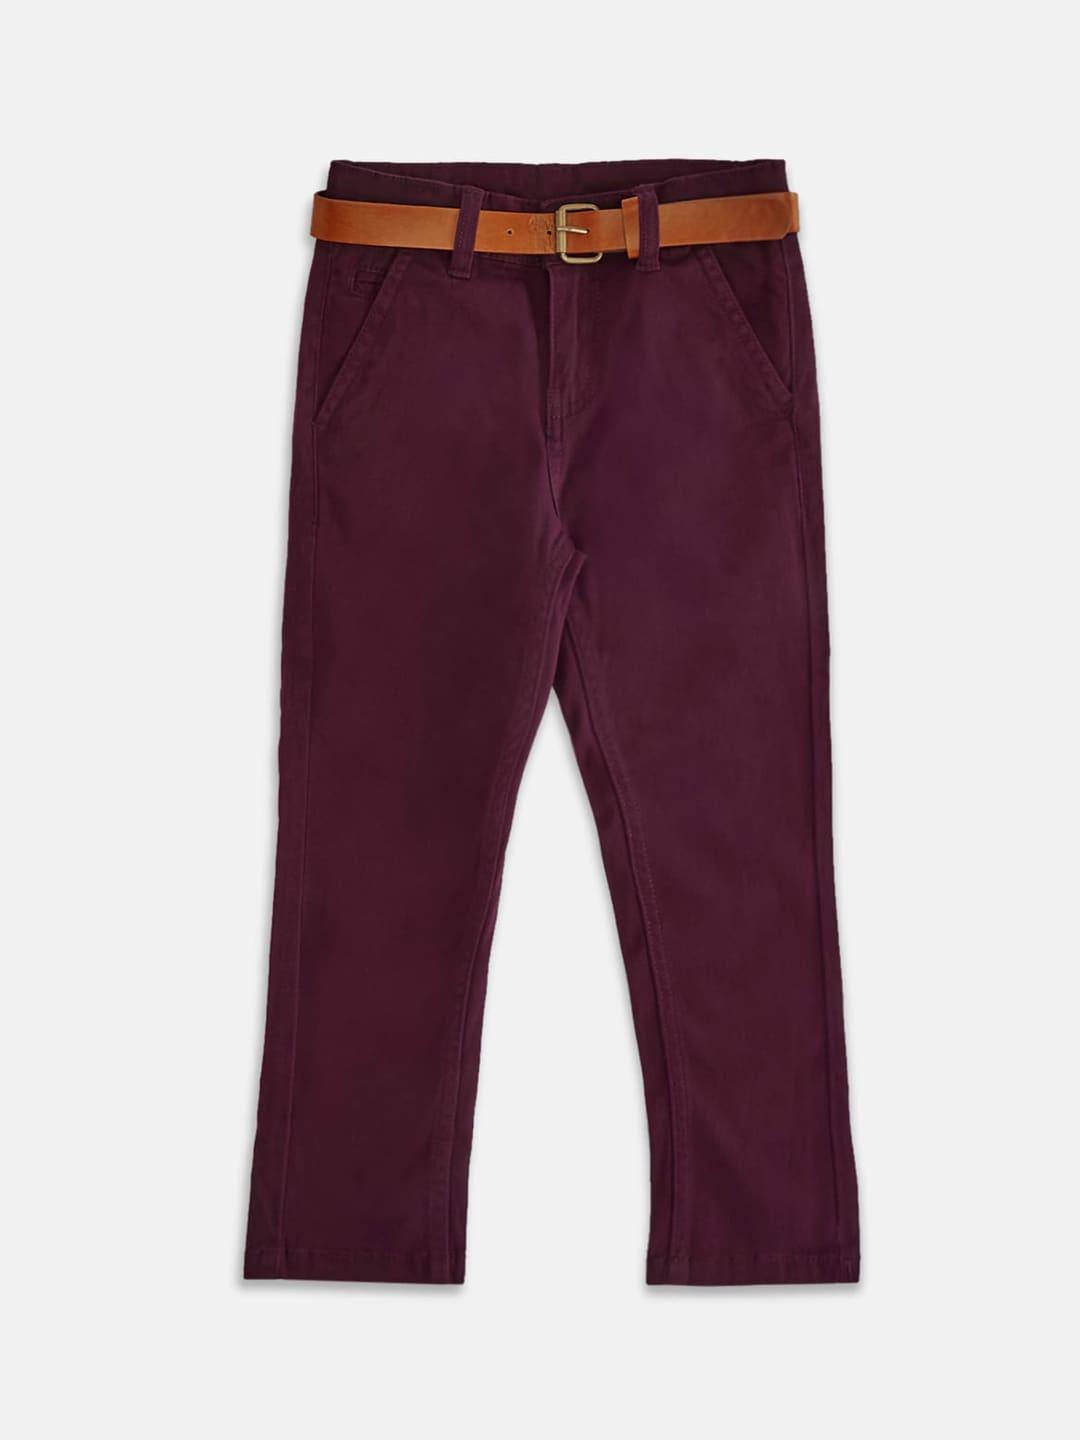 Pantaloons Junior Boys Maroon Regular Fit Cotton Chinos Trousers